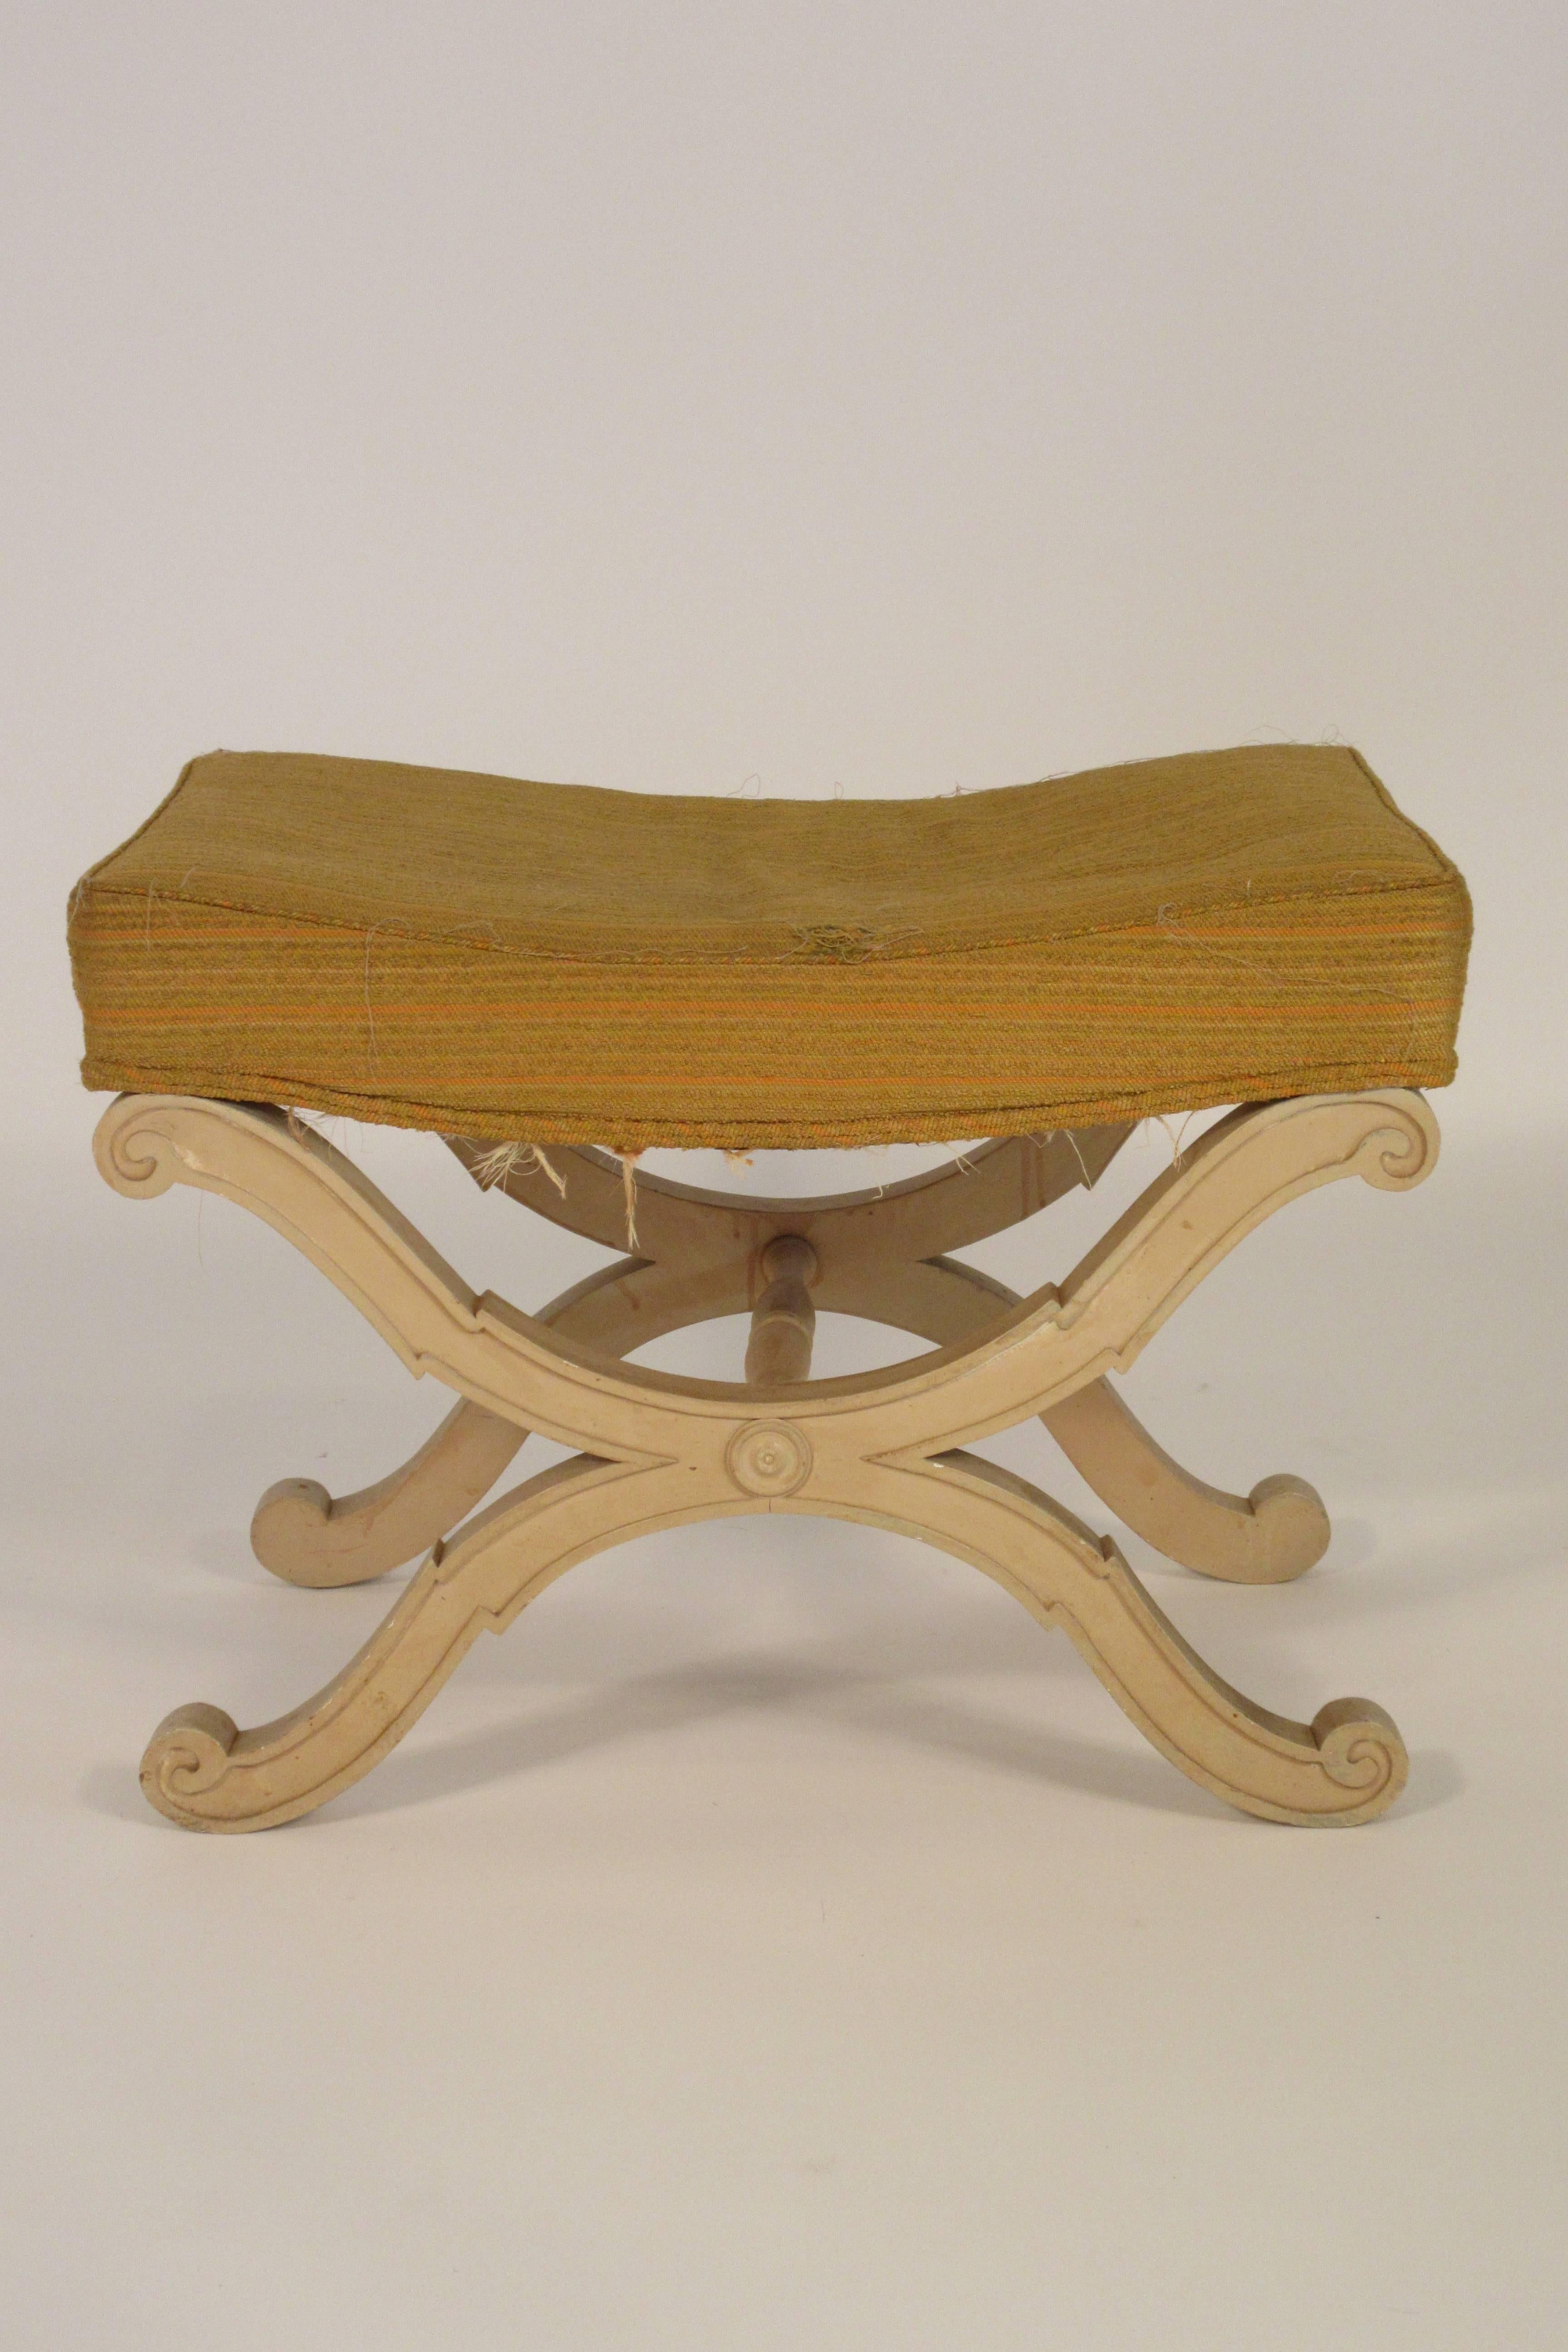 Pair of 1960s Italian decorative wood footstools. Needs reupholstering.